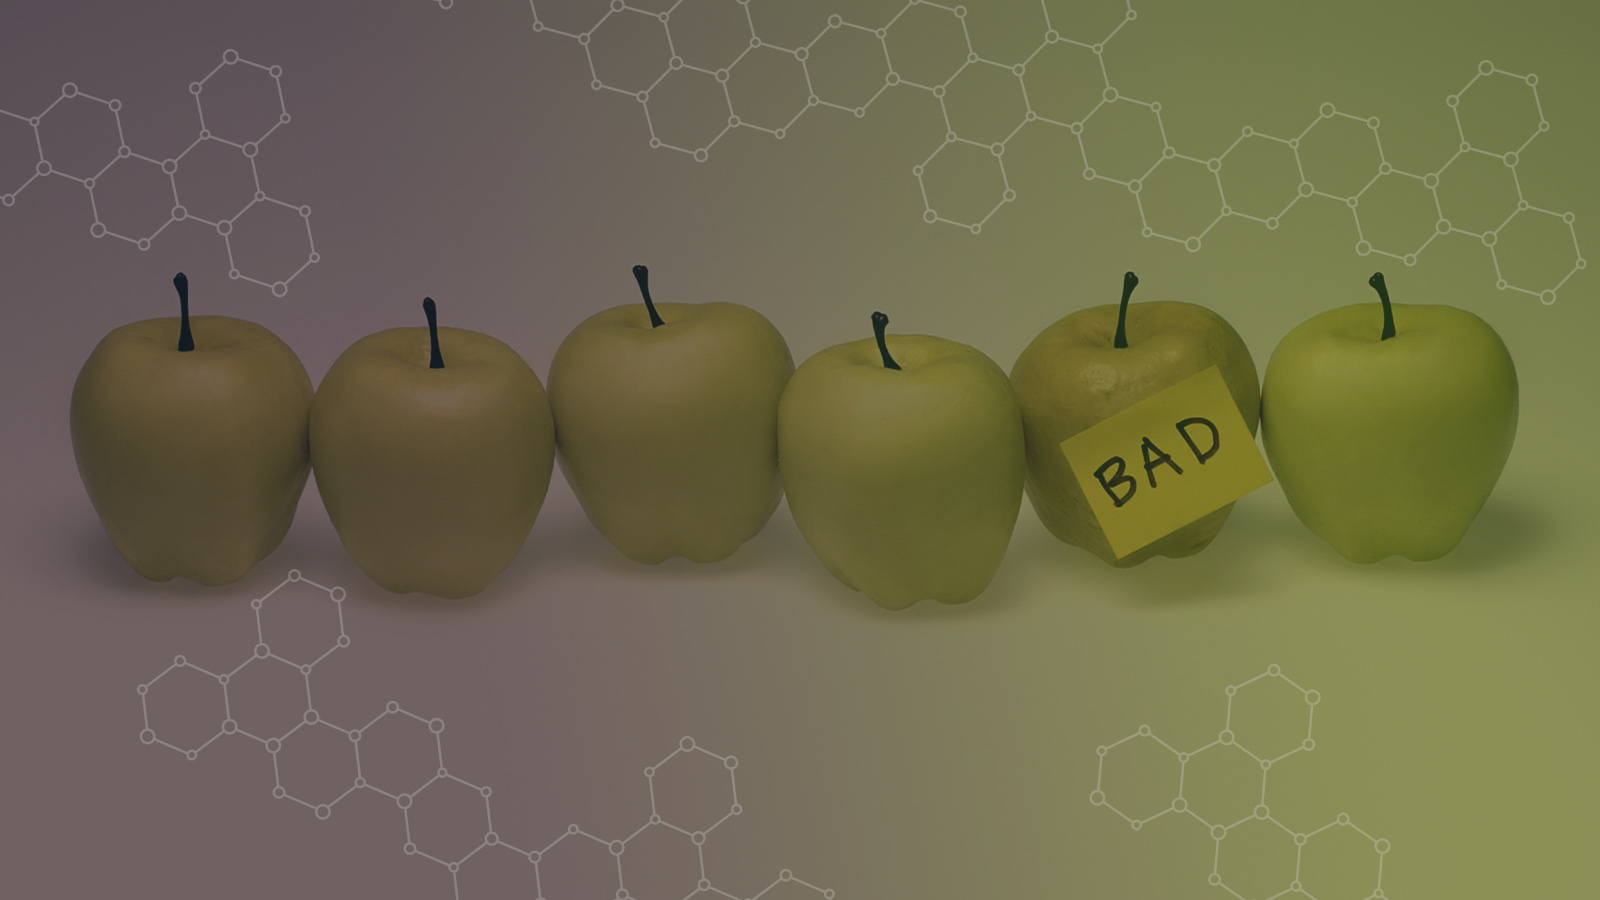 One bad apple